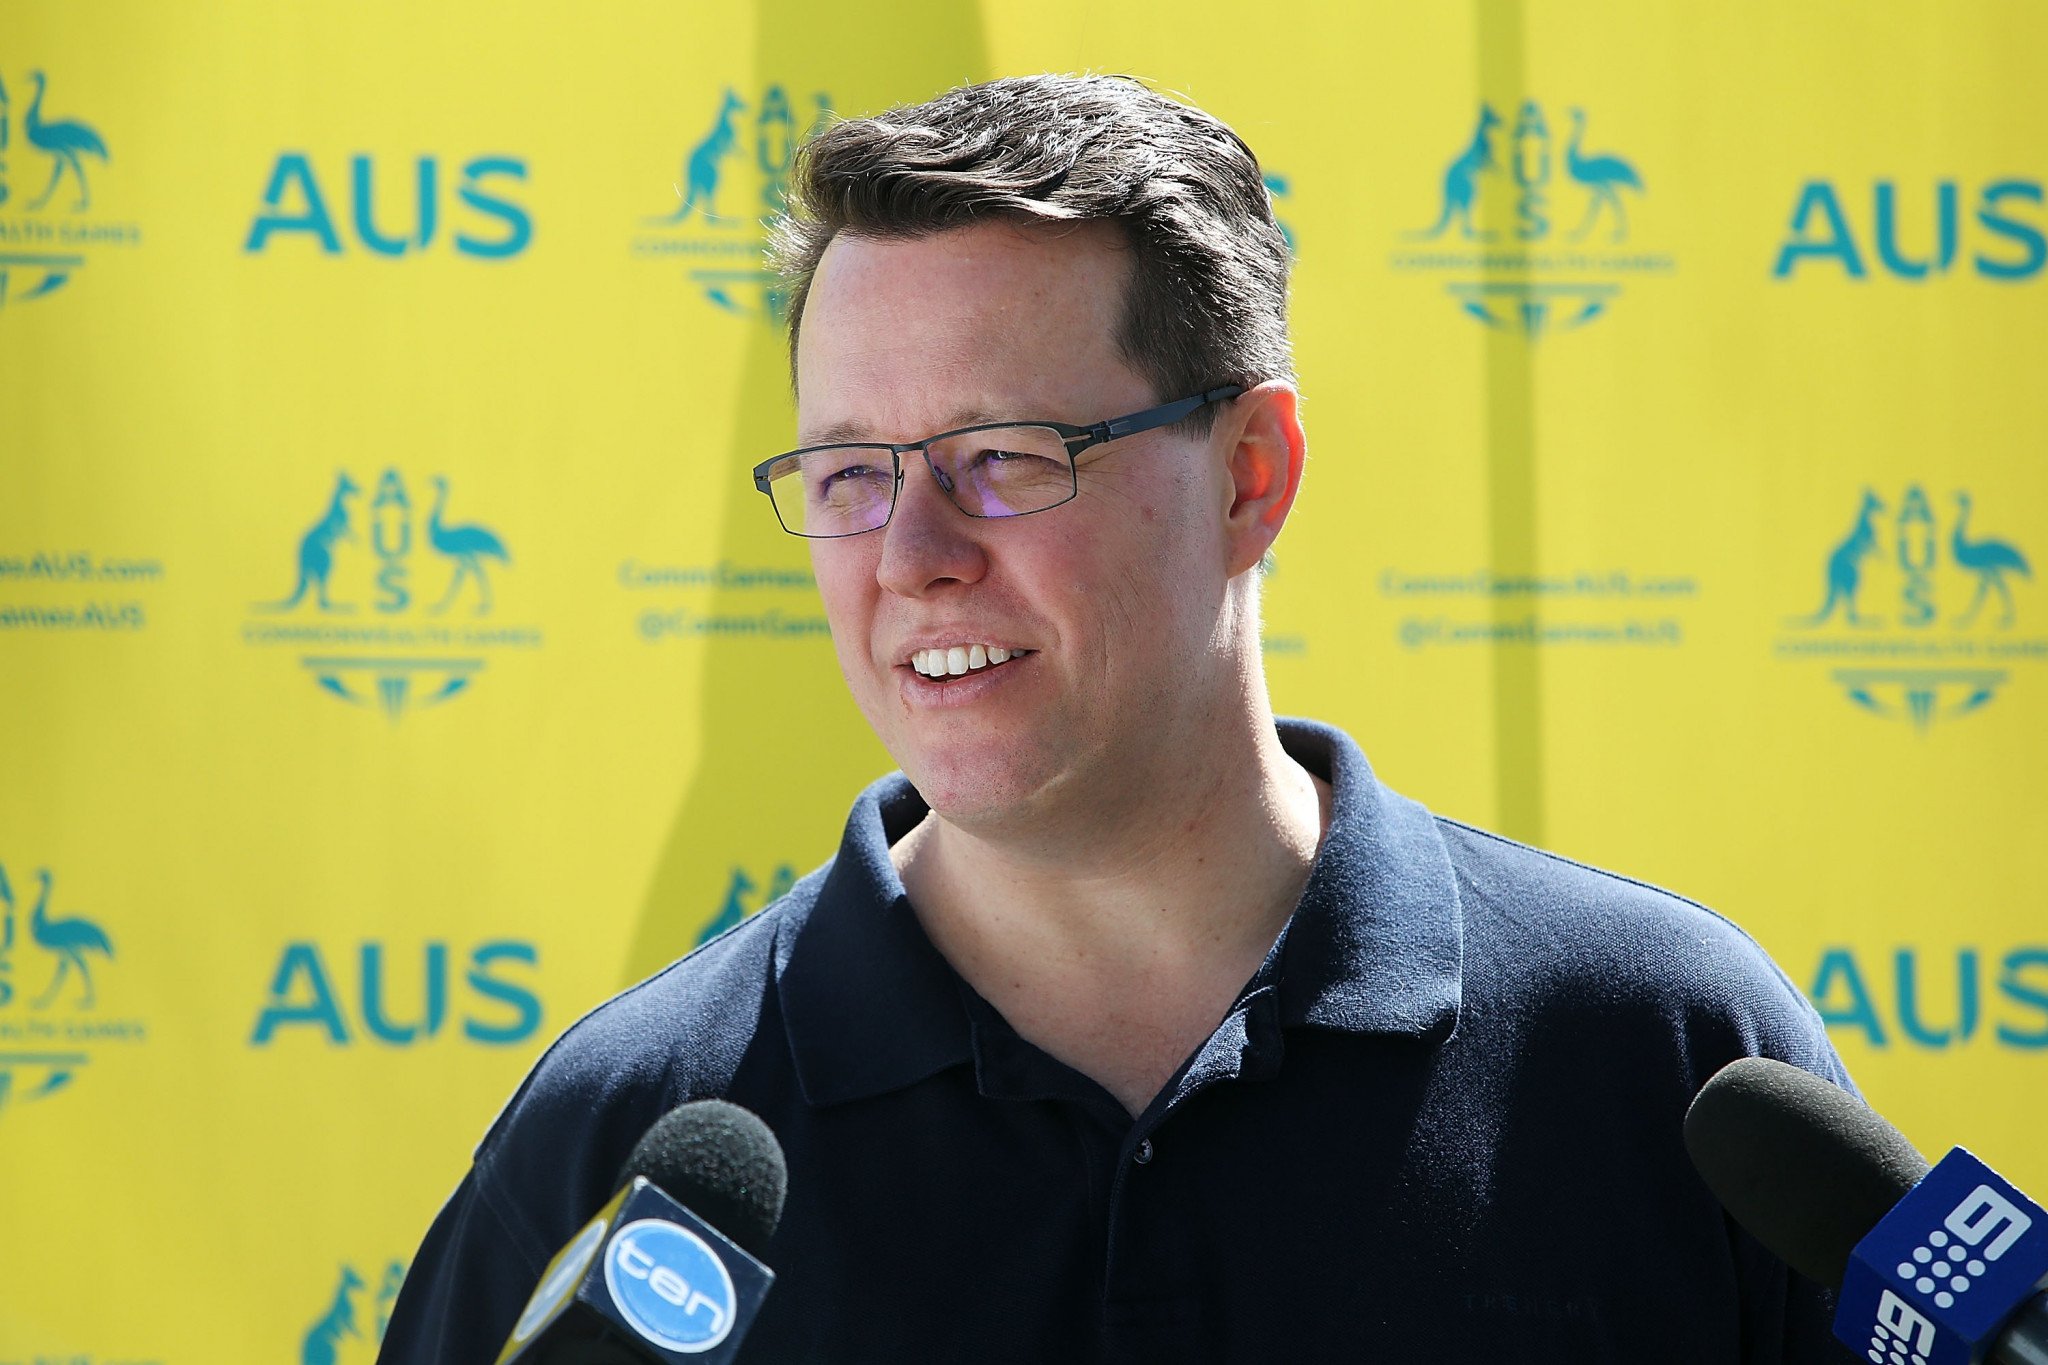 Kieren Perkins replaces John Bertrand as the new President of Swimming Australia ©Getty Images